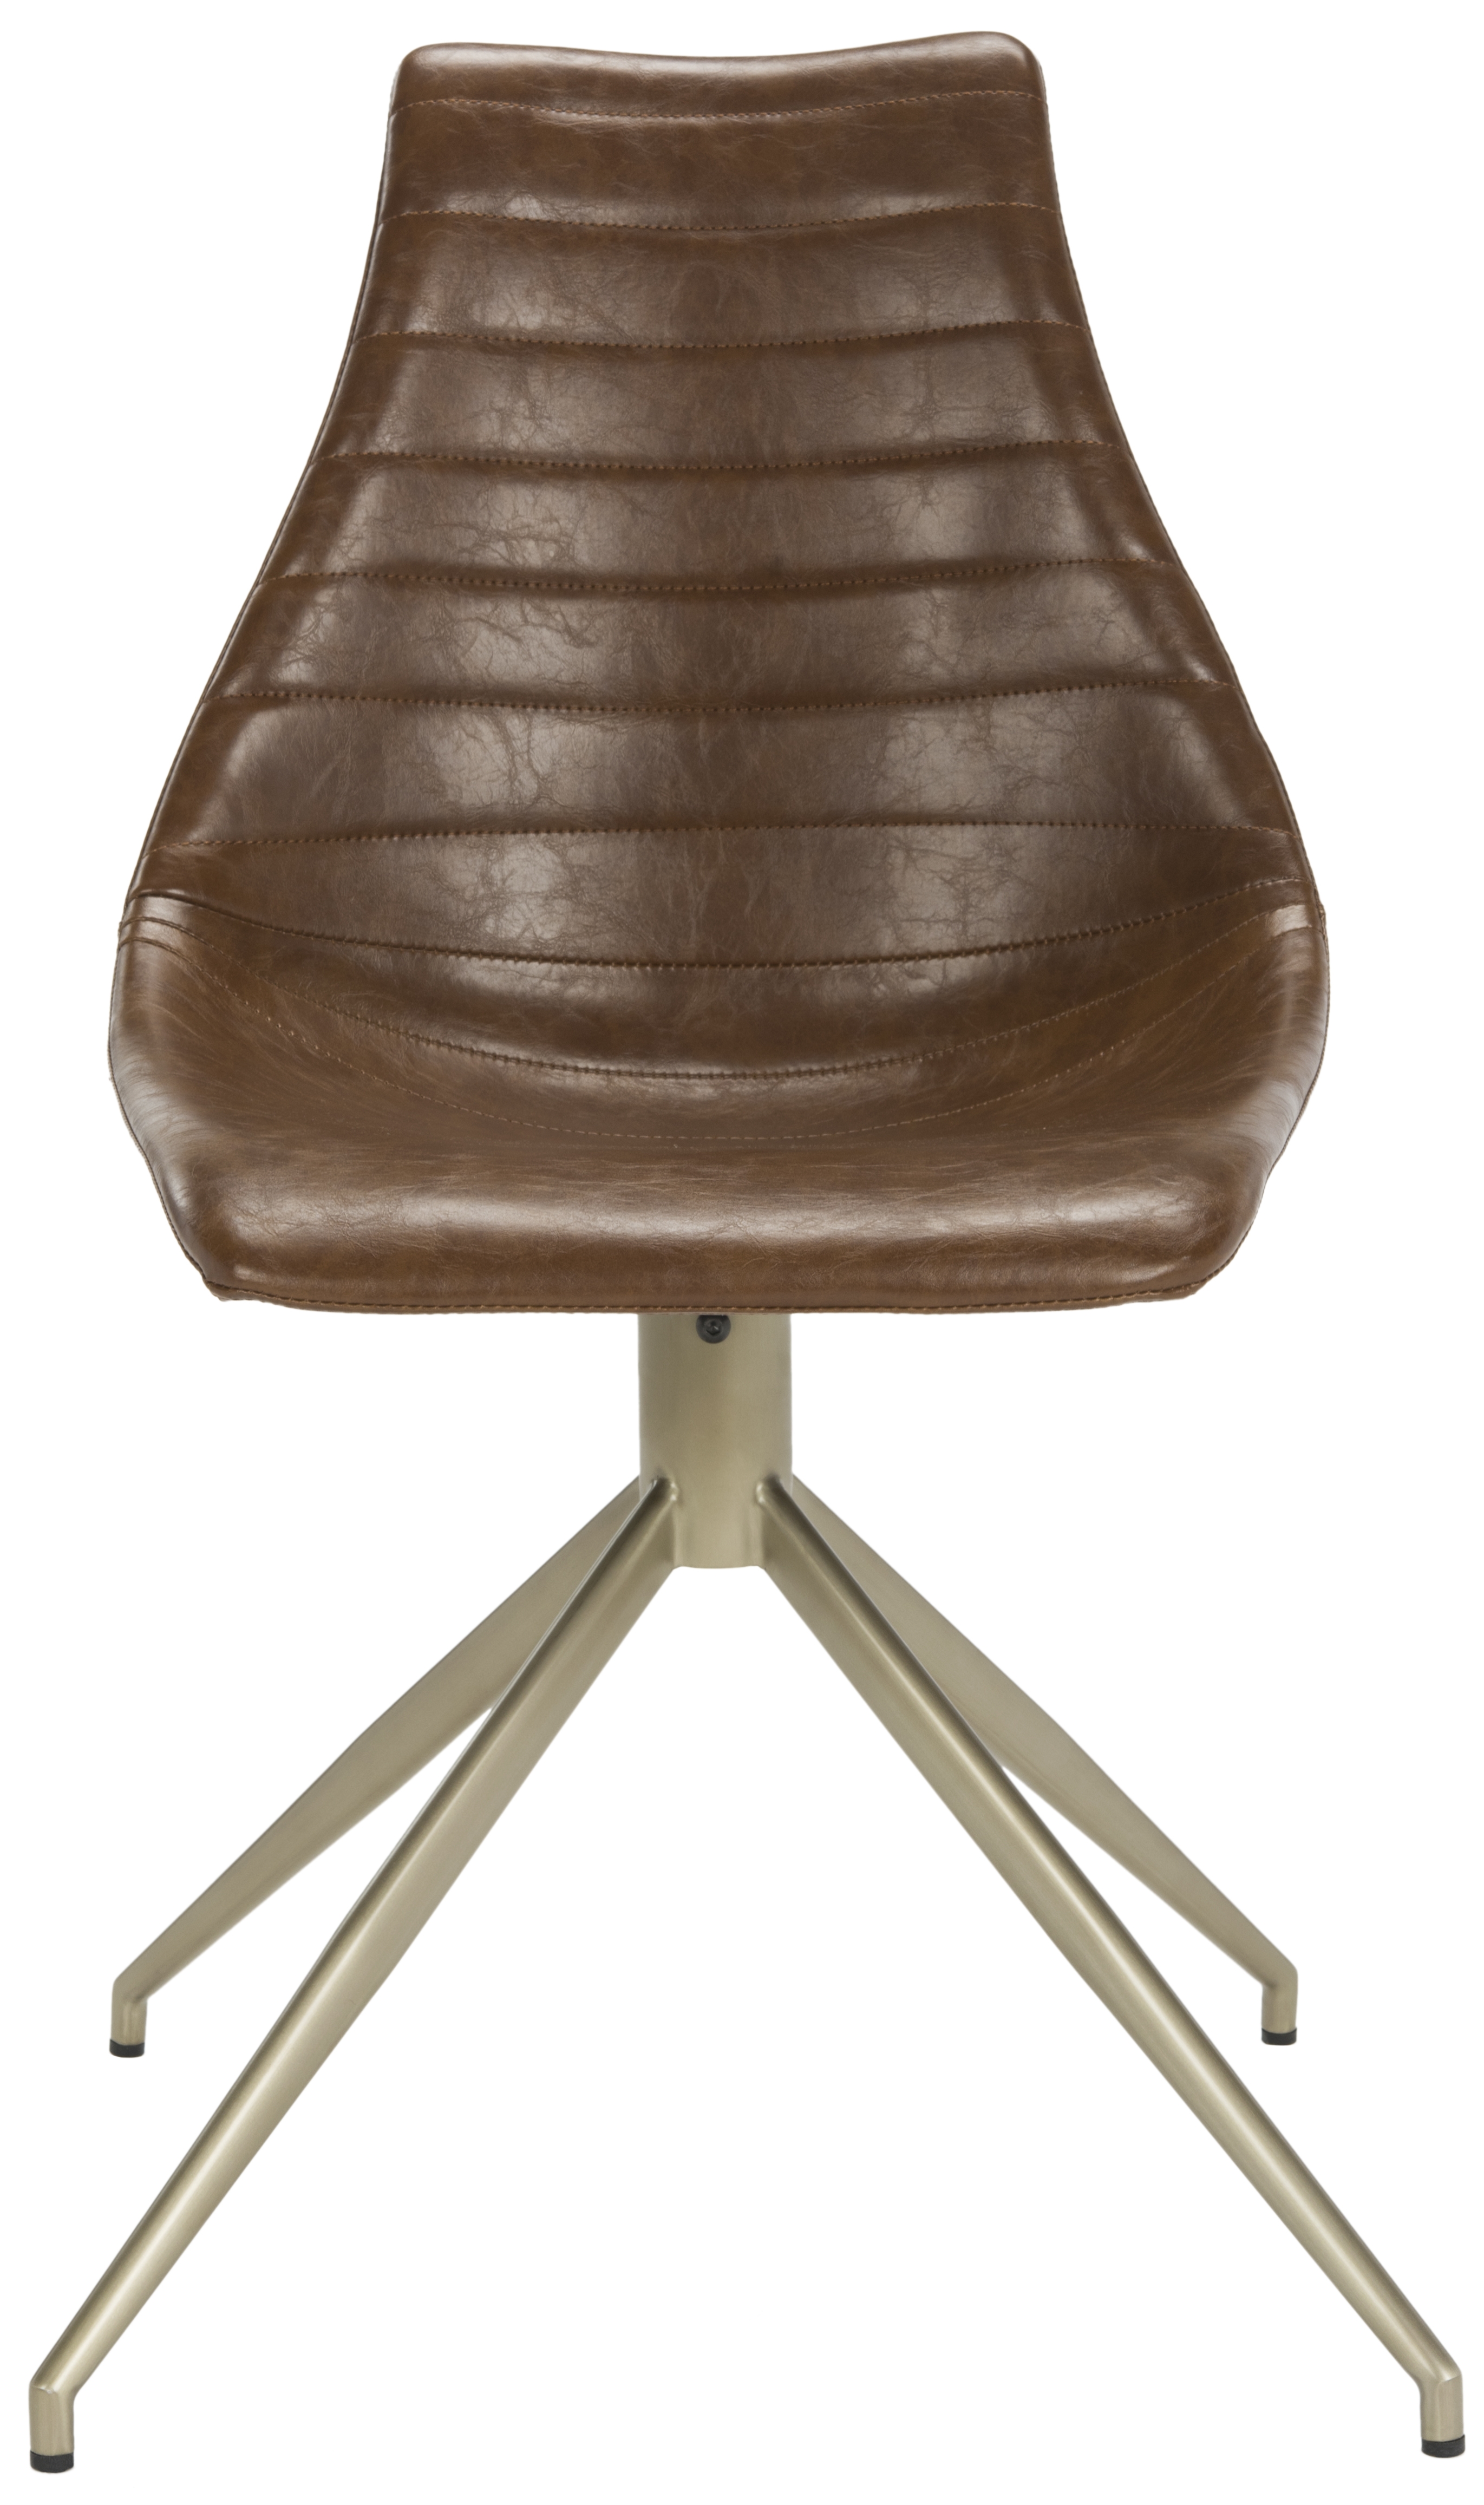 Lynette Midcentury Modern Leather Swivel Dining Chair - Light Brown/Brass - Arlo Home - Image 1